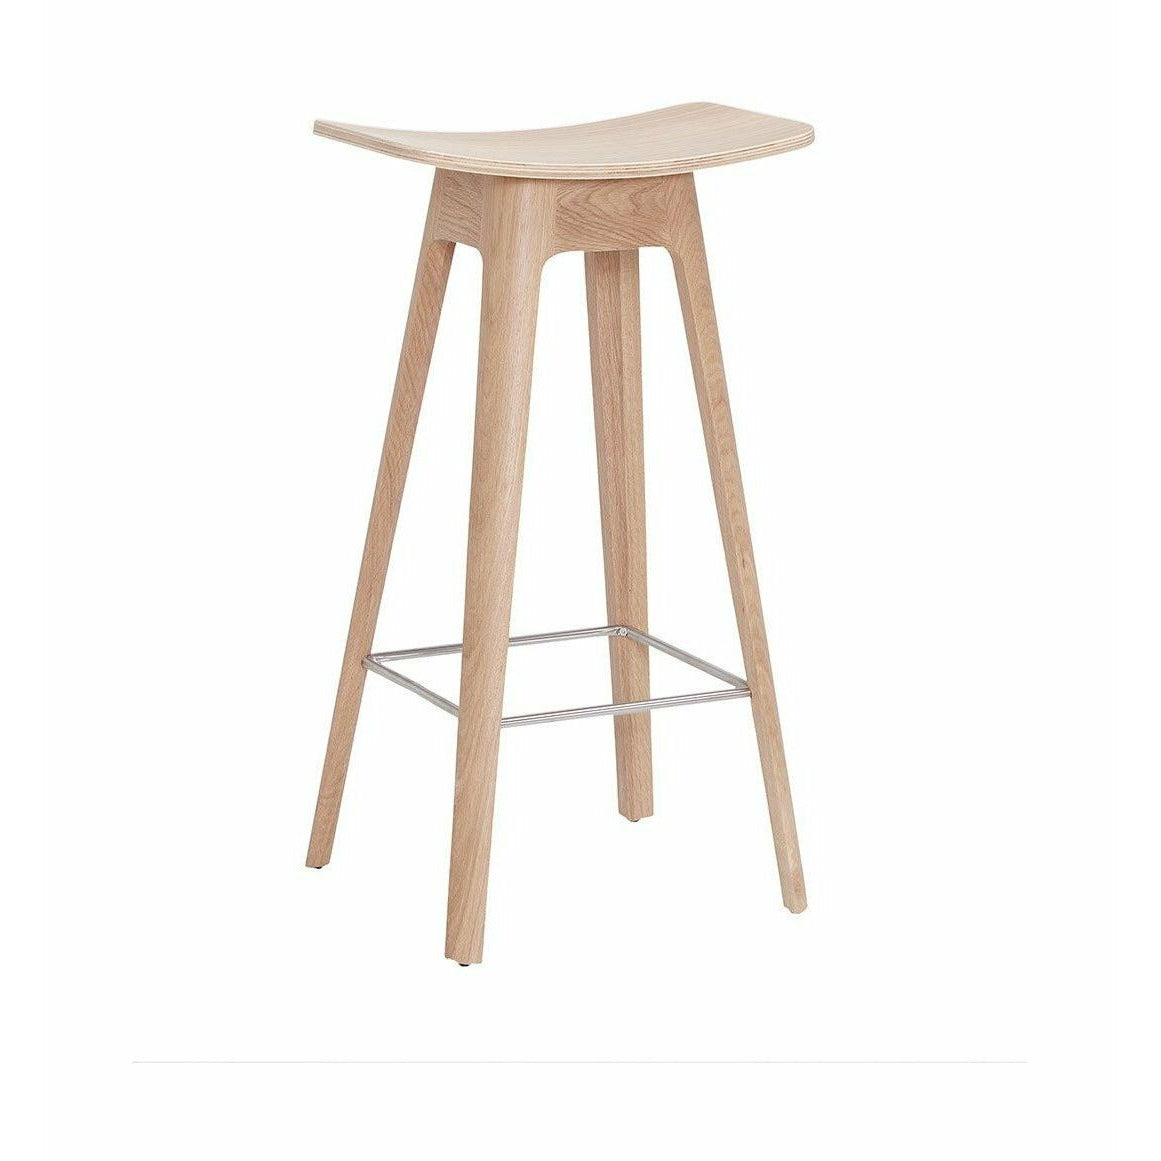 Andersen Furniture HC1 BAR STOOL in quercia, H 67 cm